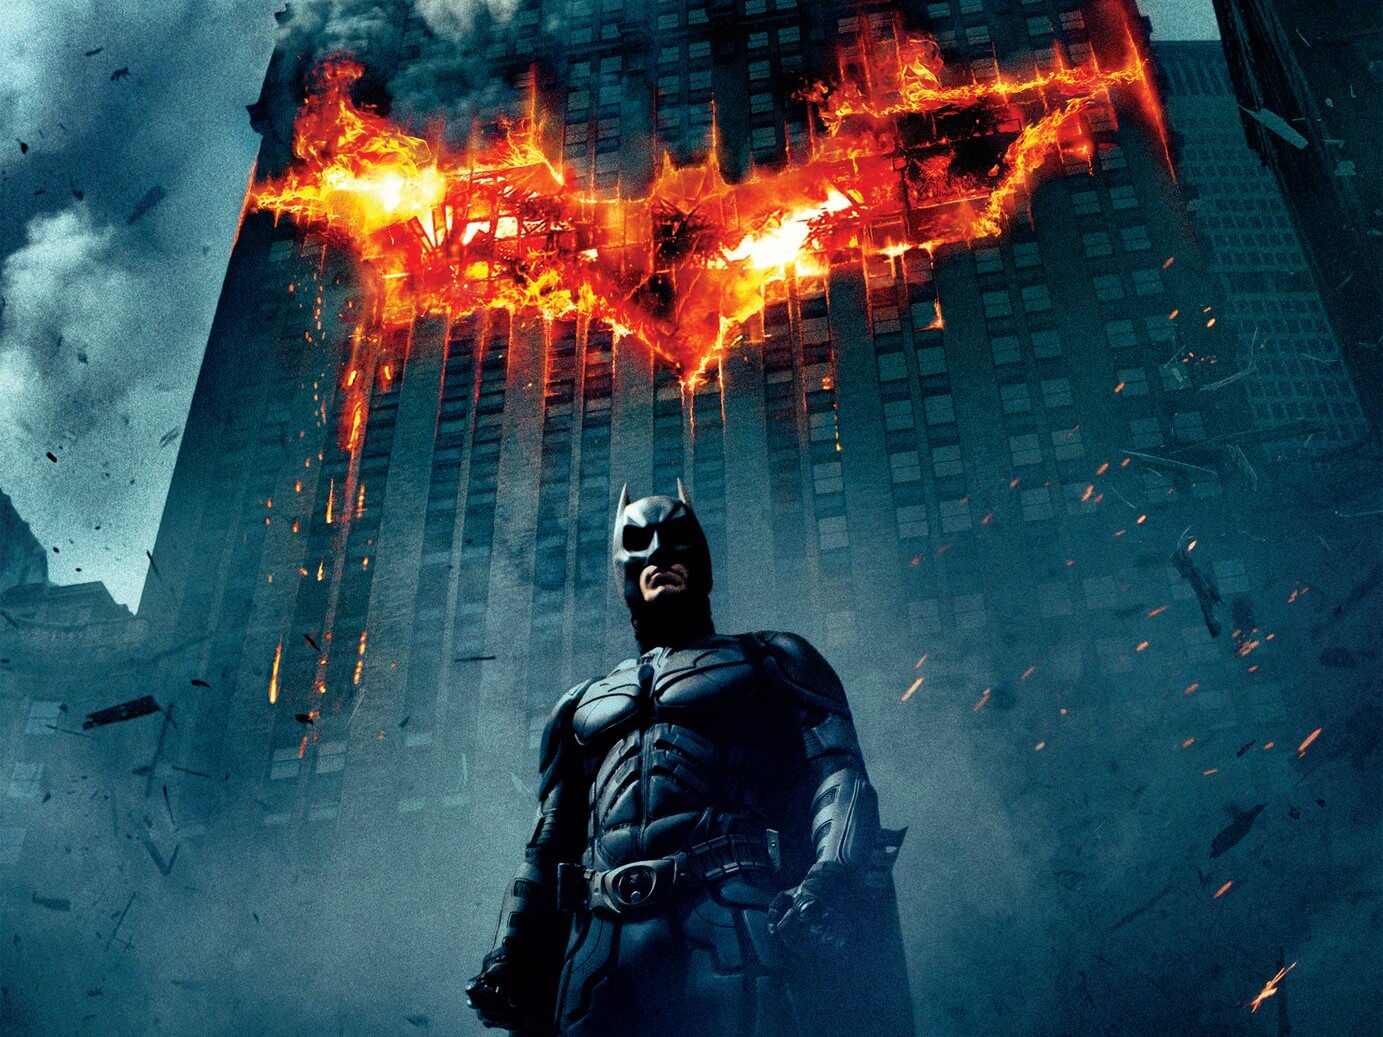 The Dark Knight [2008] by Christopher Nolan - Movie Summary